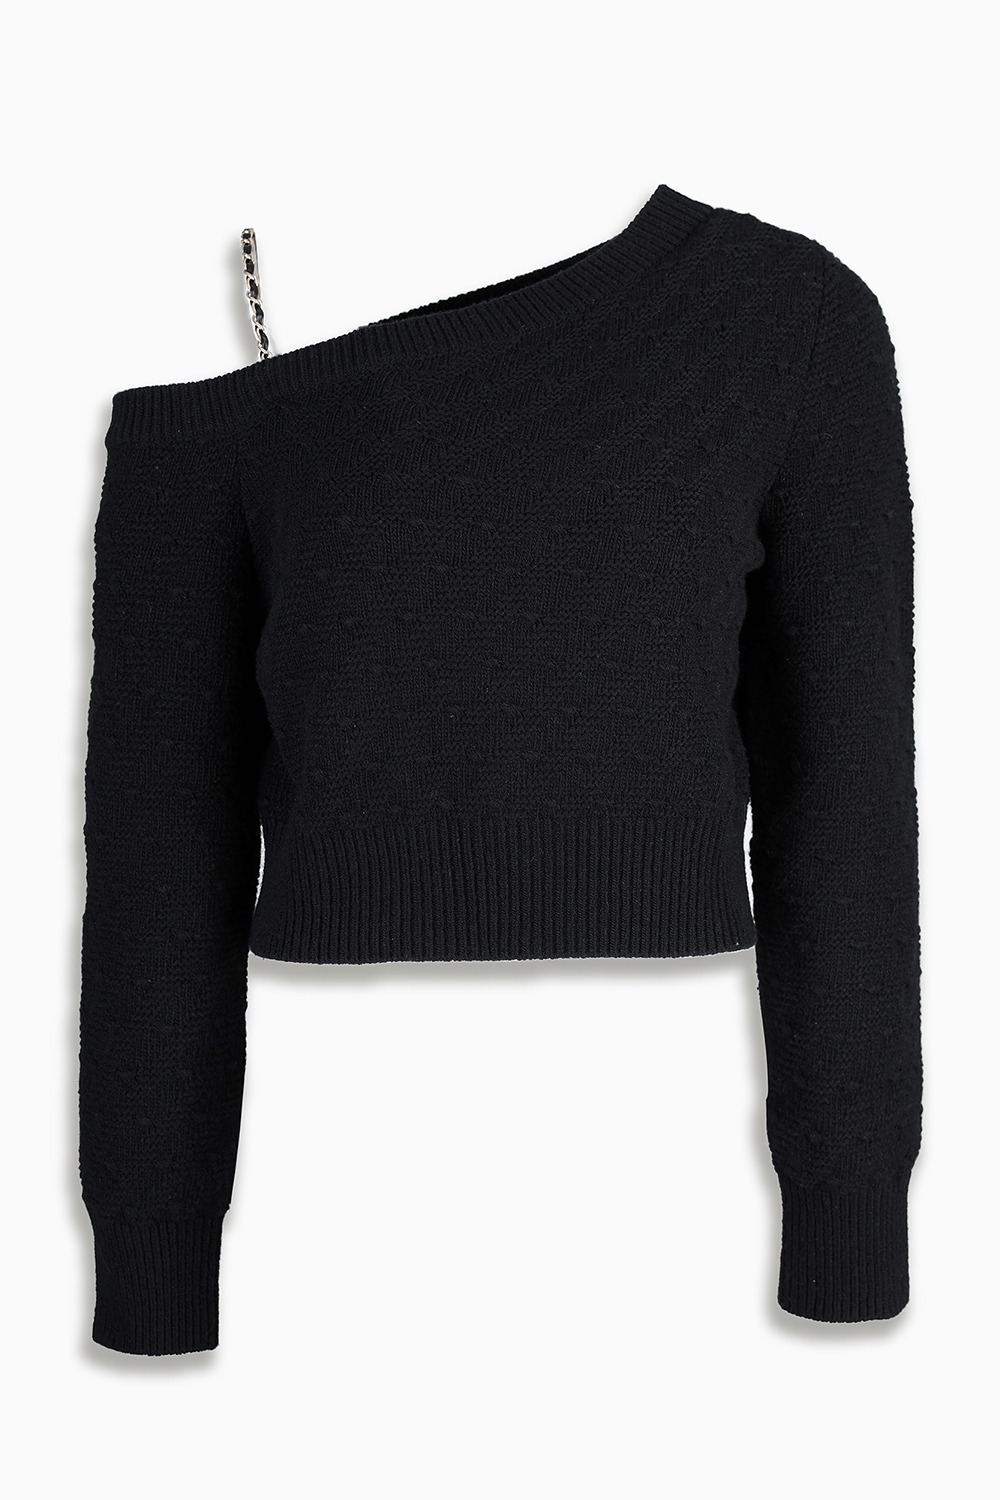 HIGH QUALITY LINE - Olivia Shoulder Chain Knit Top (BLACK)